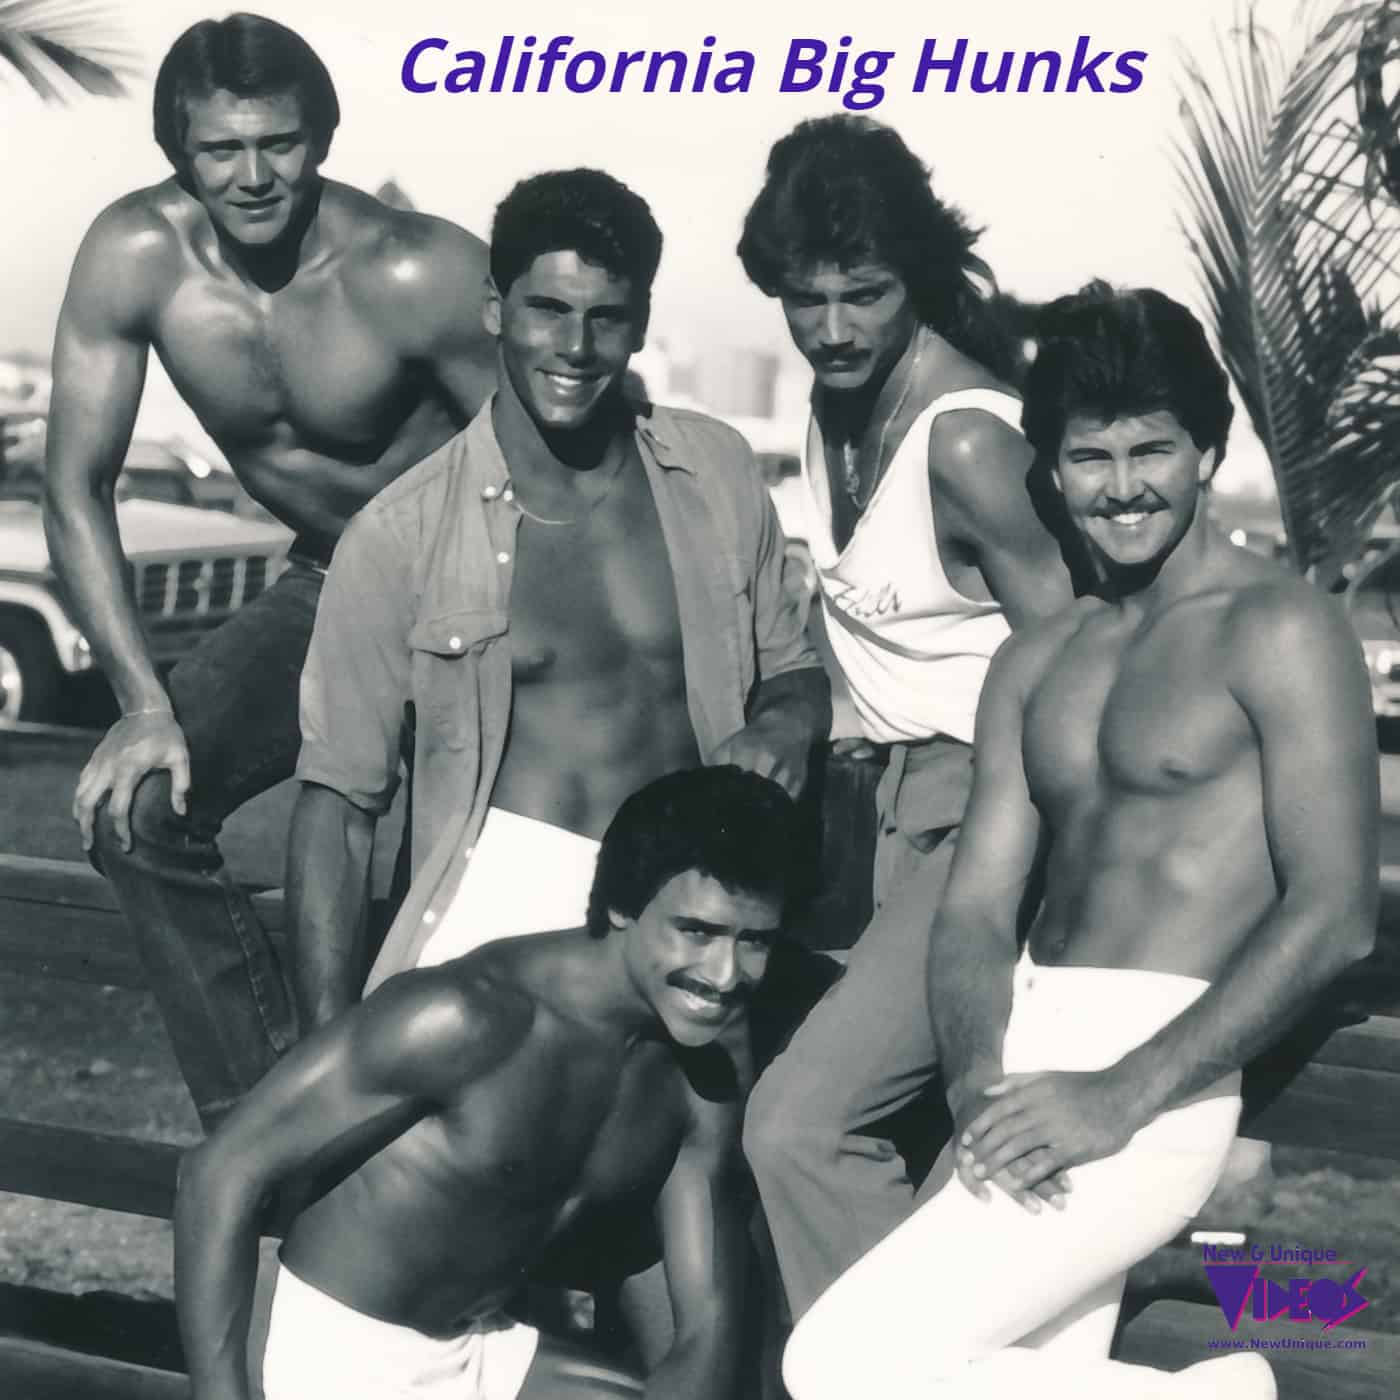 California Big Hunks Original Soundtrack by Richard Jan Plasko at Bandcamp